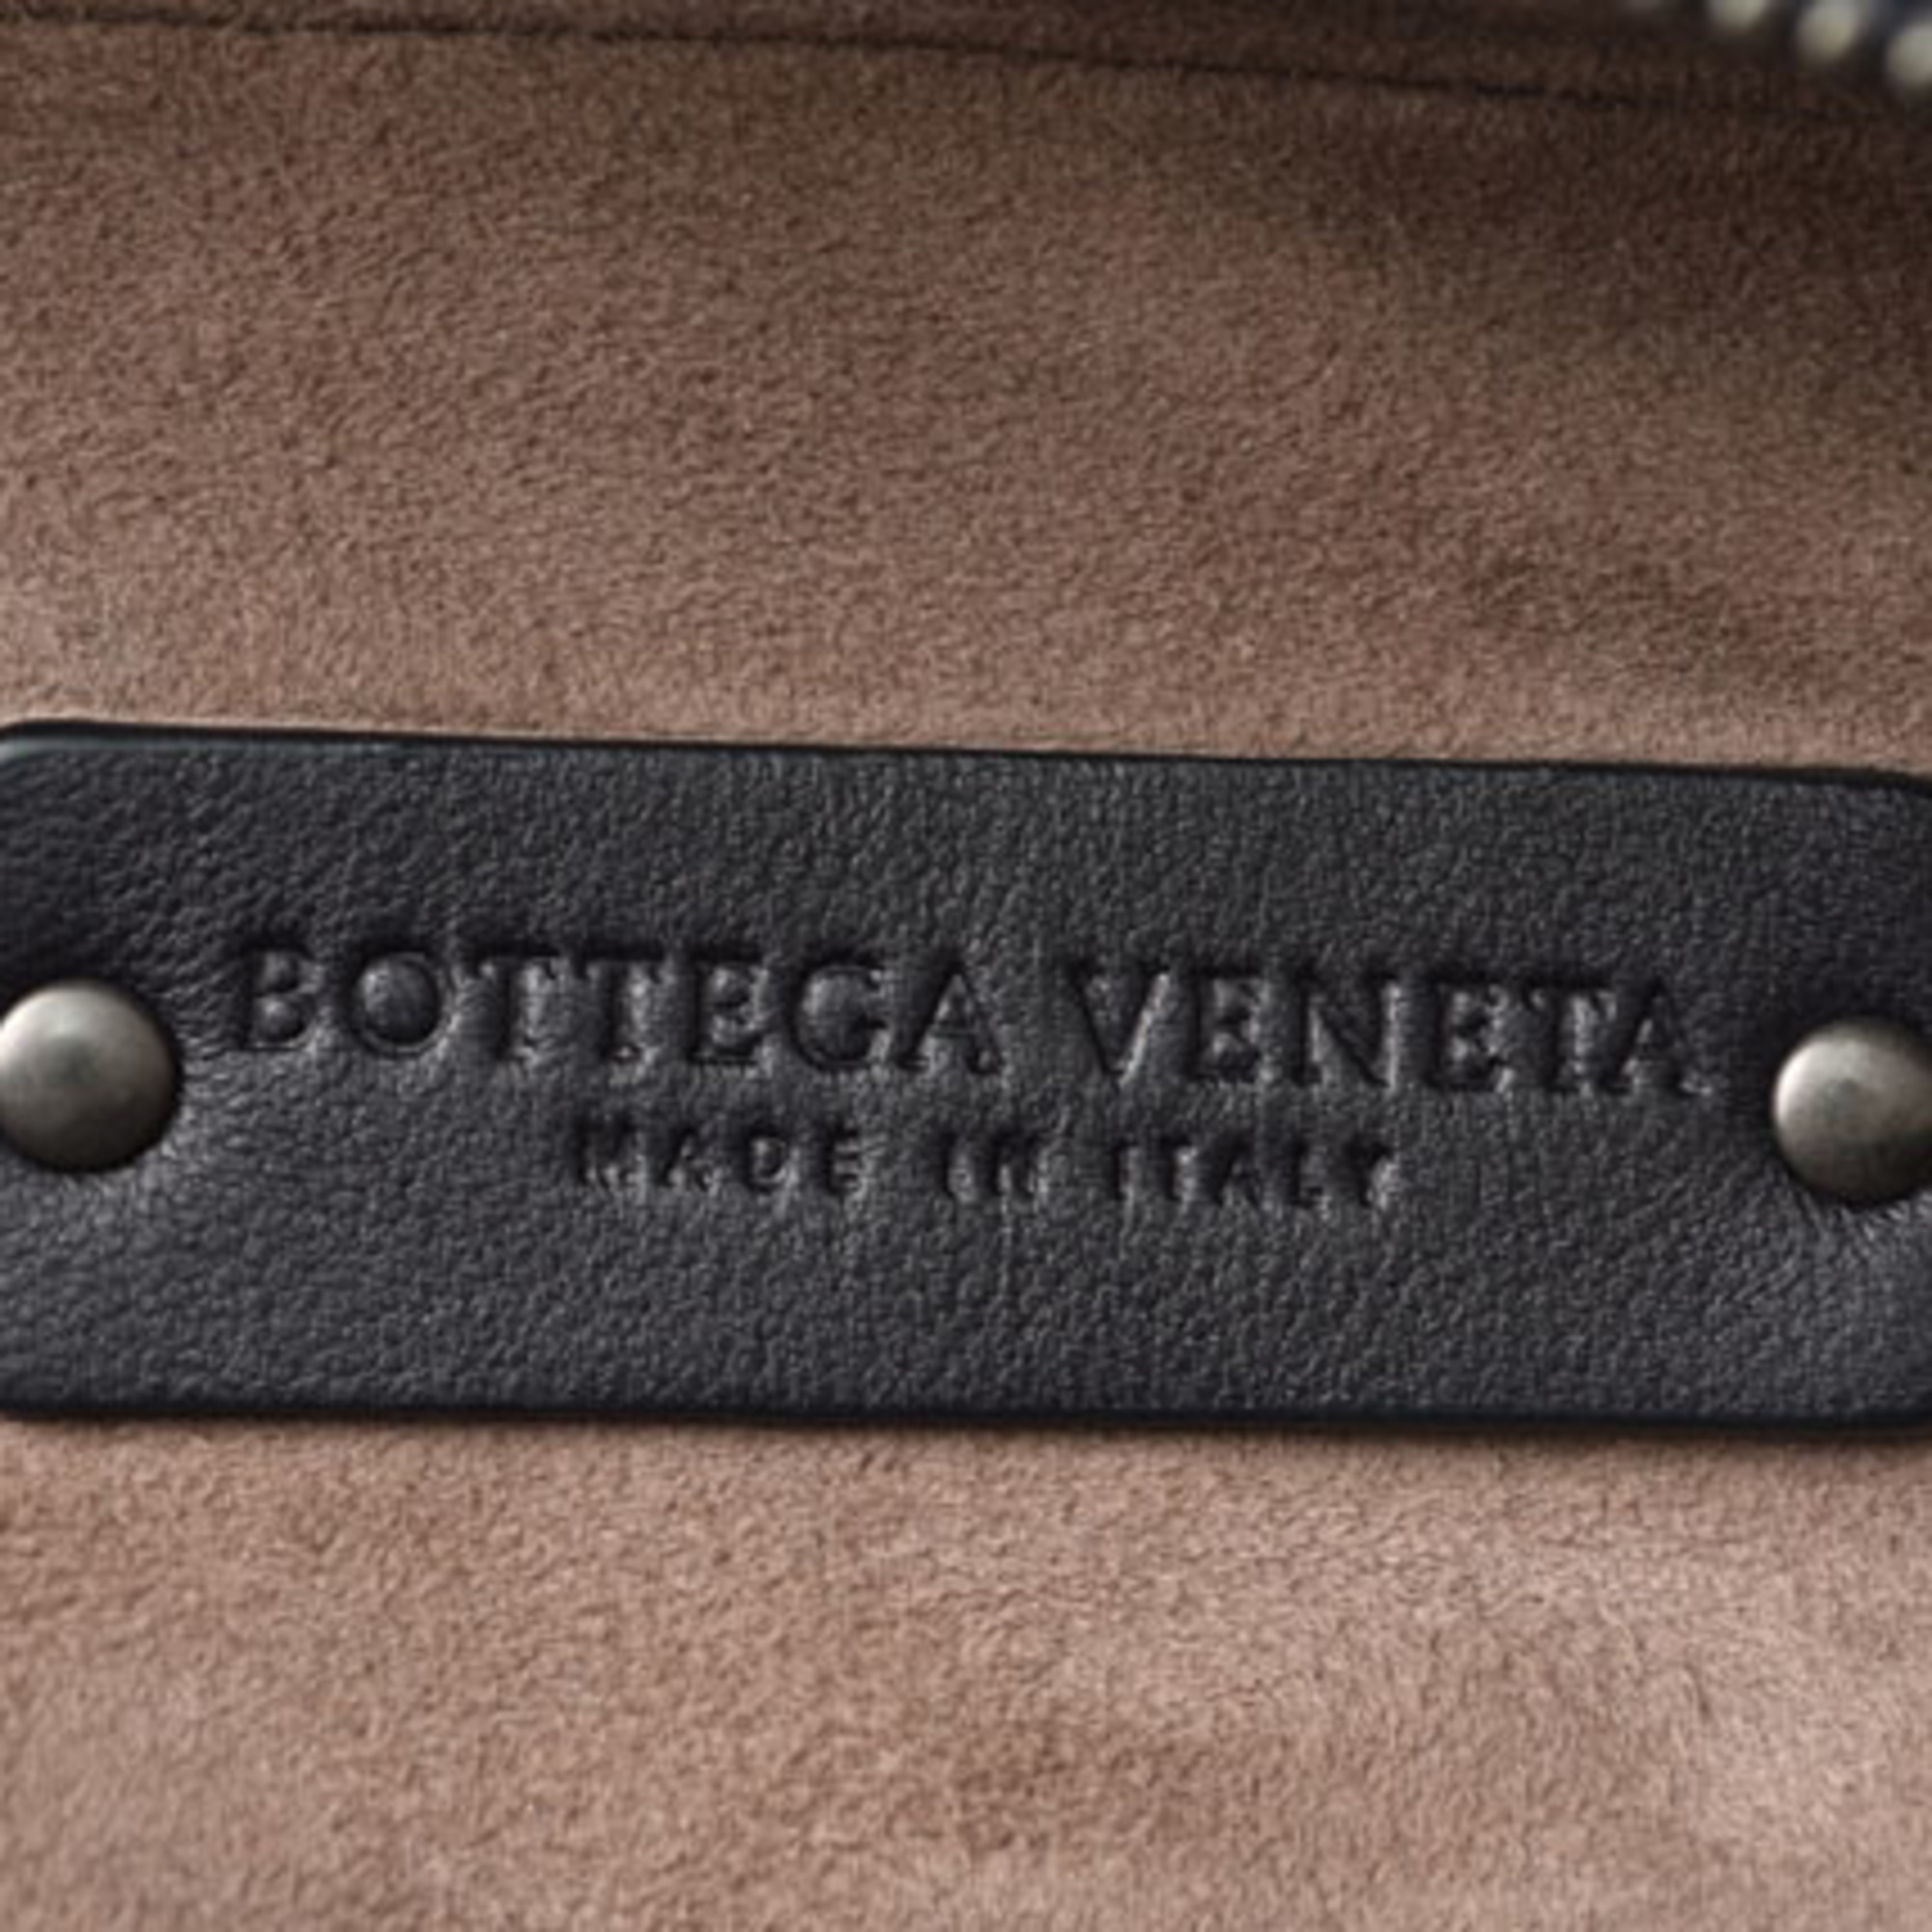 Bottega Veneta shoulder bag chain BOTTEGA VENETA intrecciato embossed leather black